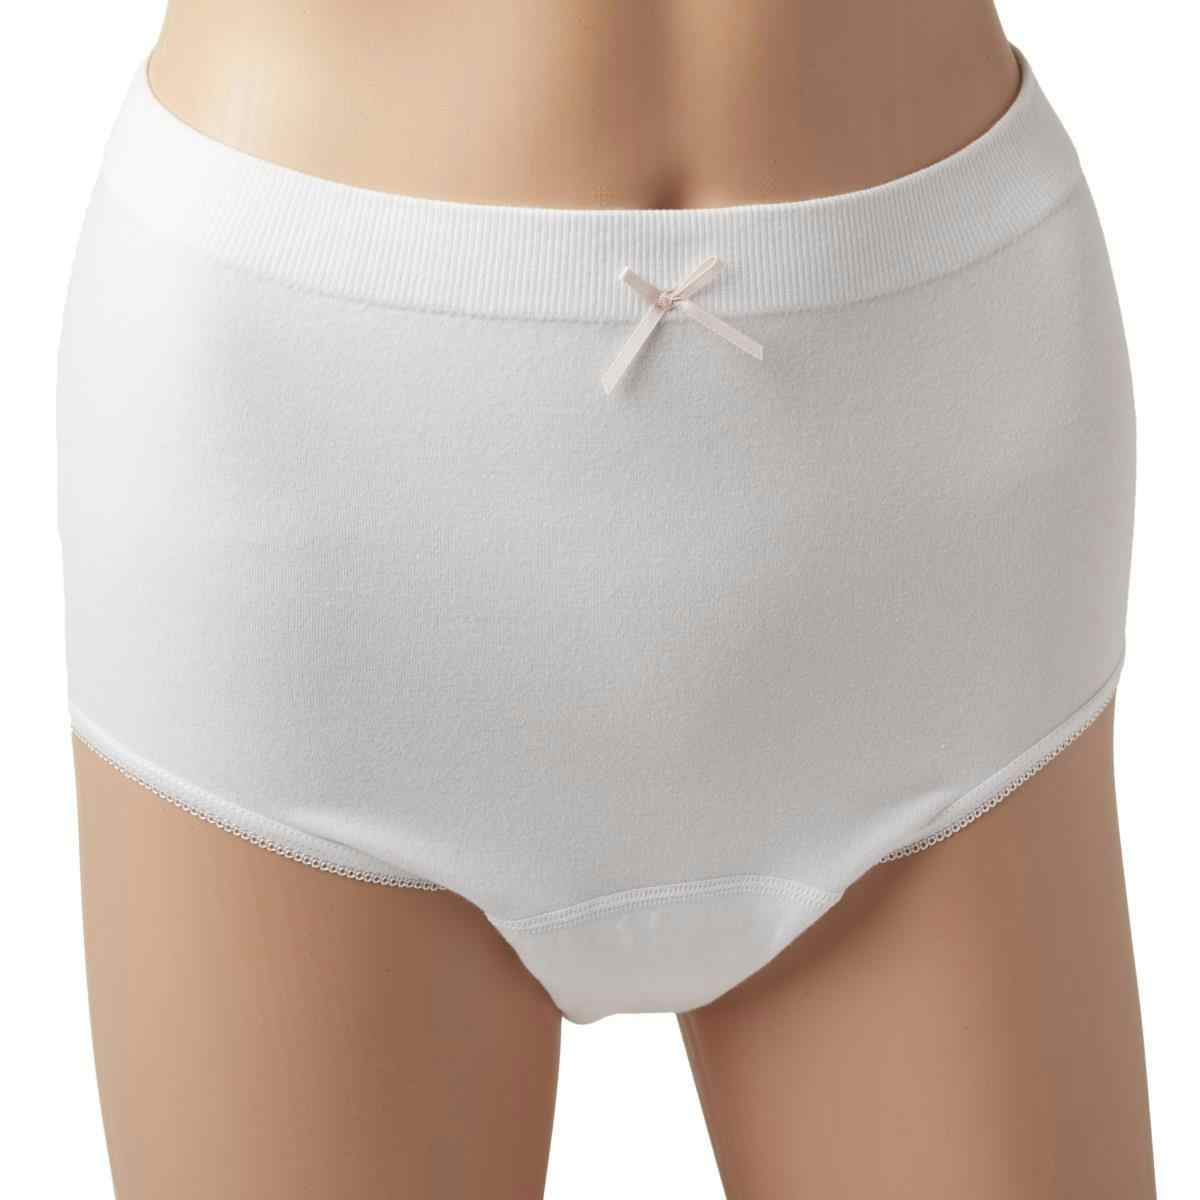 Medline Reusable Bladder Control Panties for Women, Light Absorbency, BCPANTLGZ, Large (30-33") - 1 Each